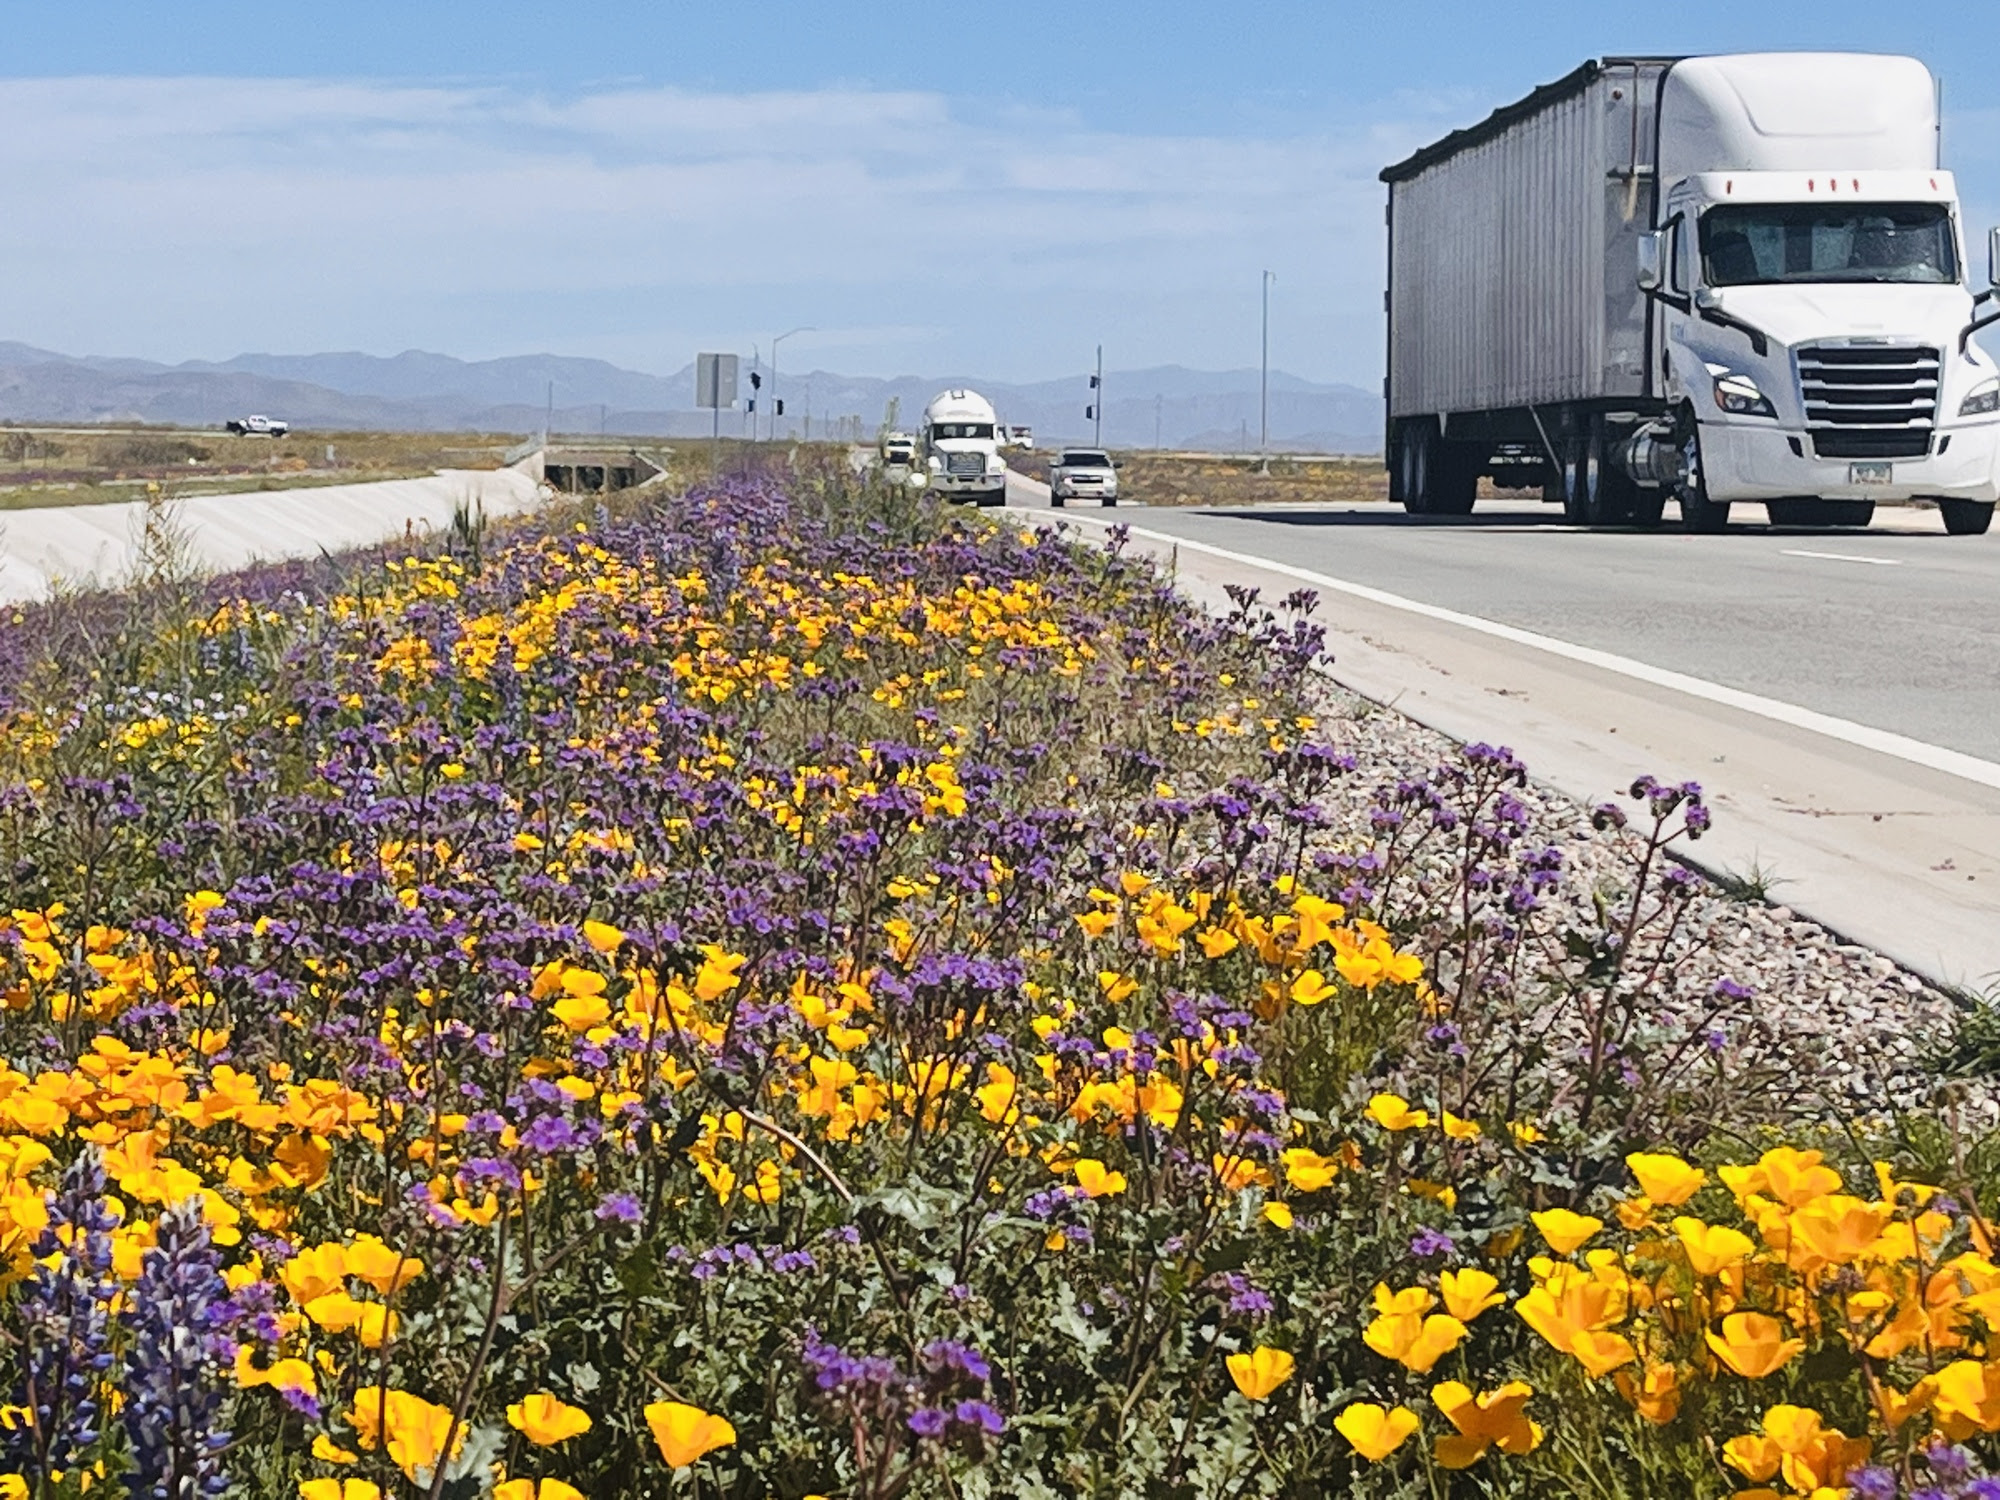 A highway median is awash in flower blooms.